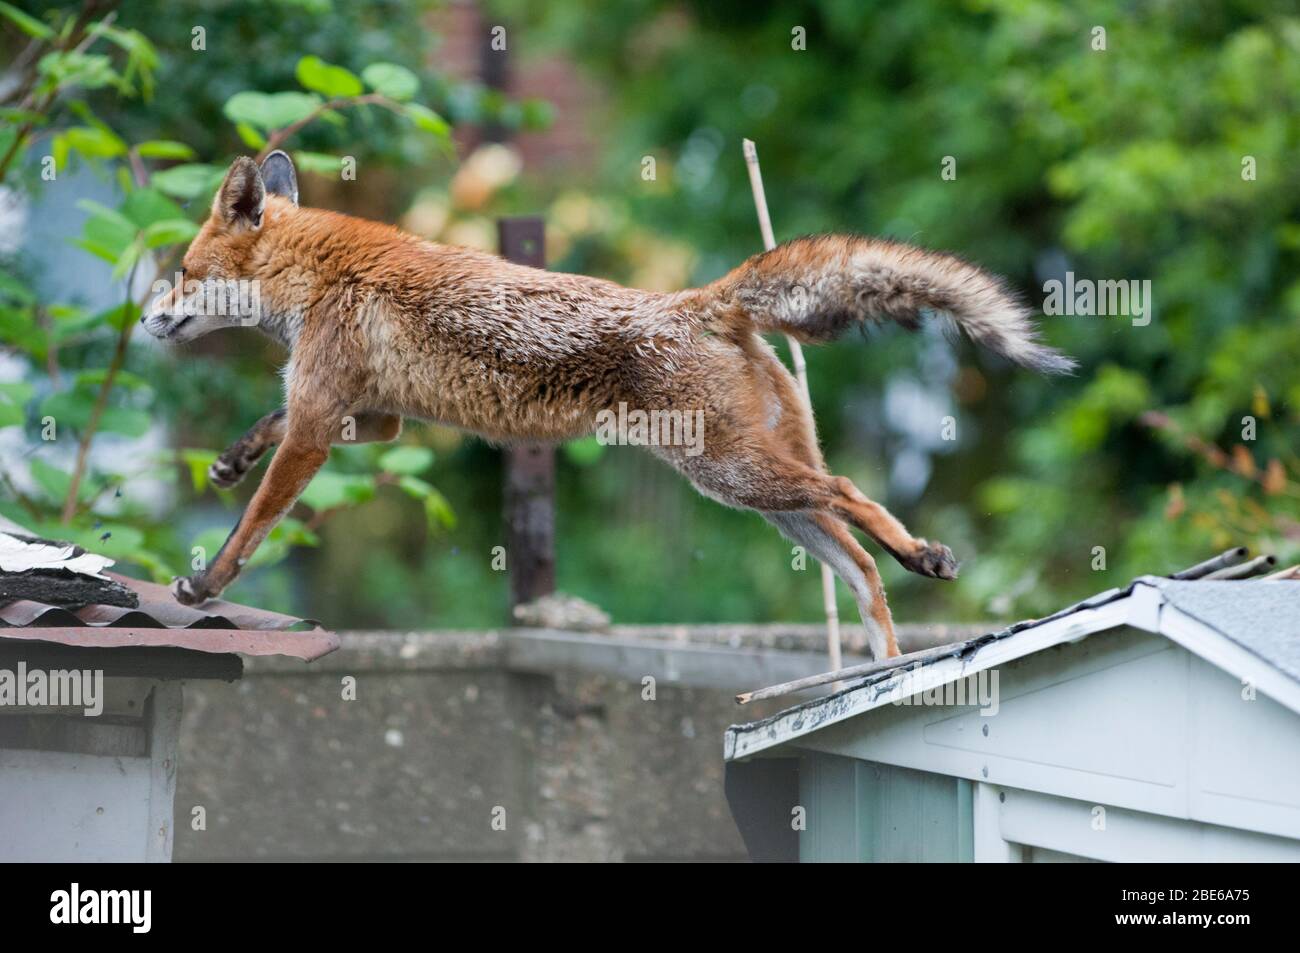 Hombre adulto Red Fox, vulpes vulpes, saltando a través de cobertizos de jardín, Londres, Reino Unido Foto de stock